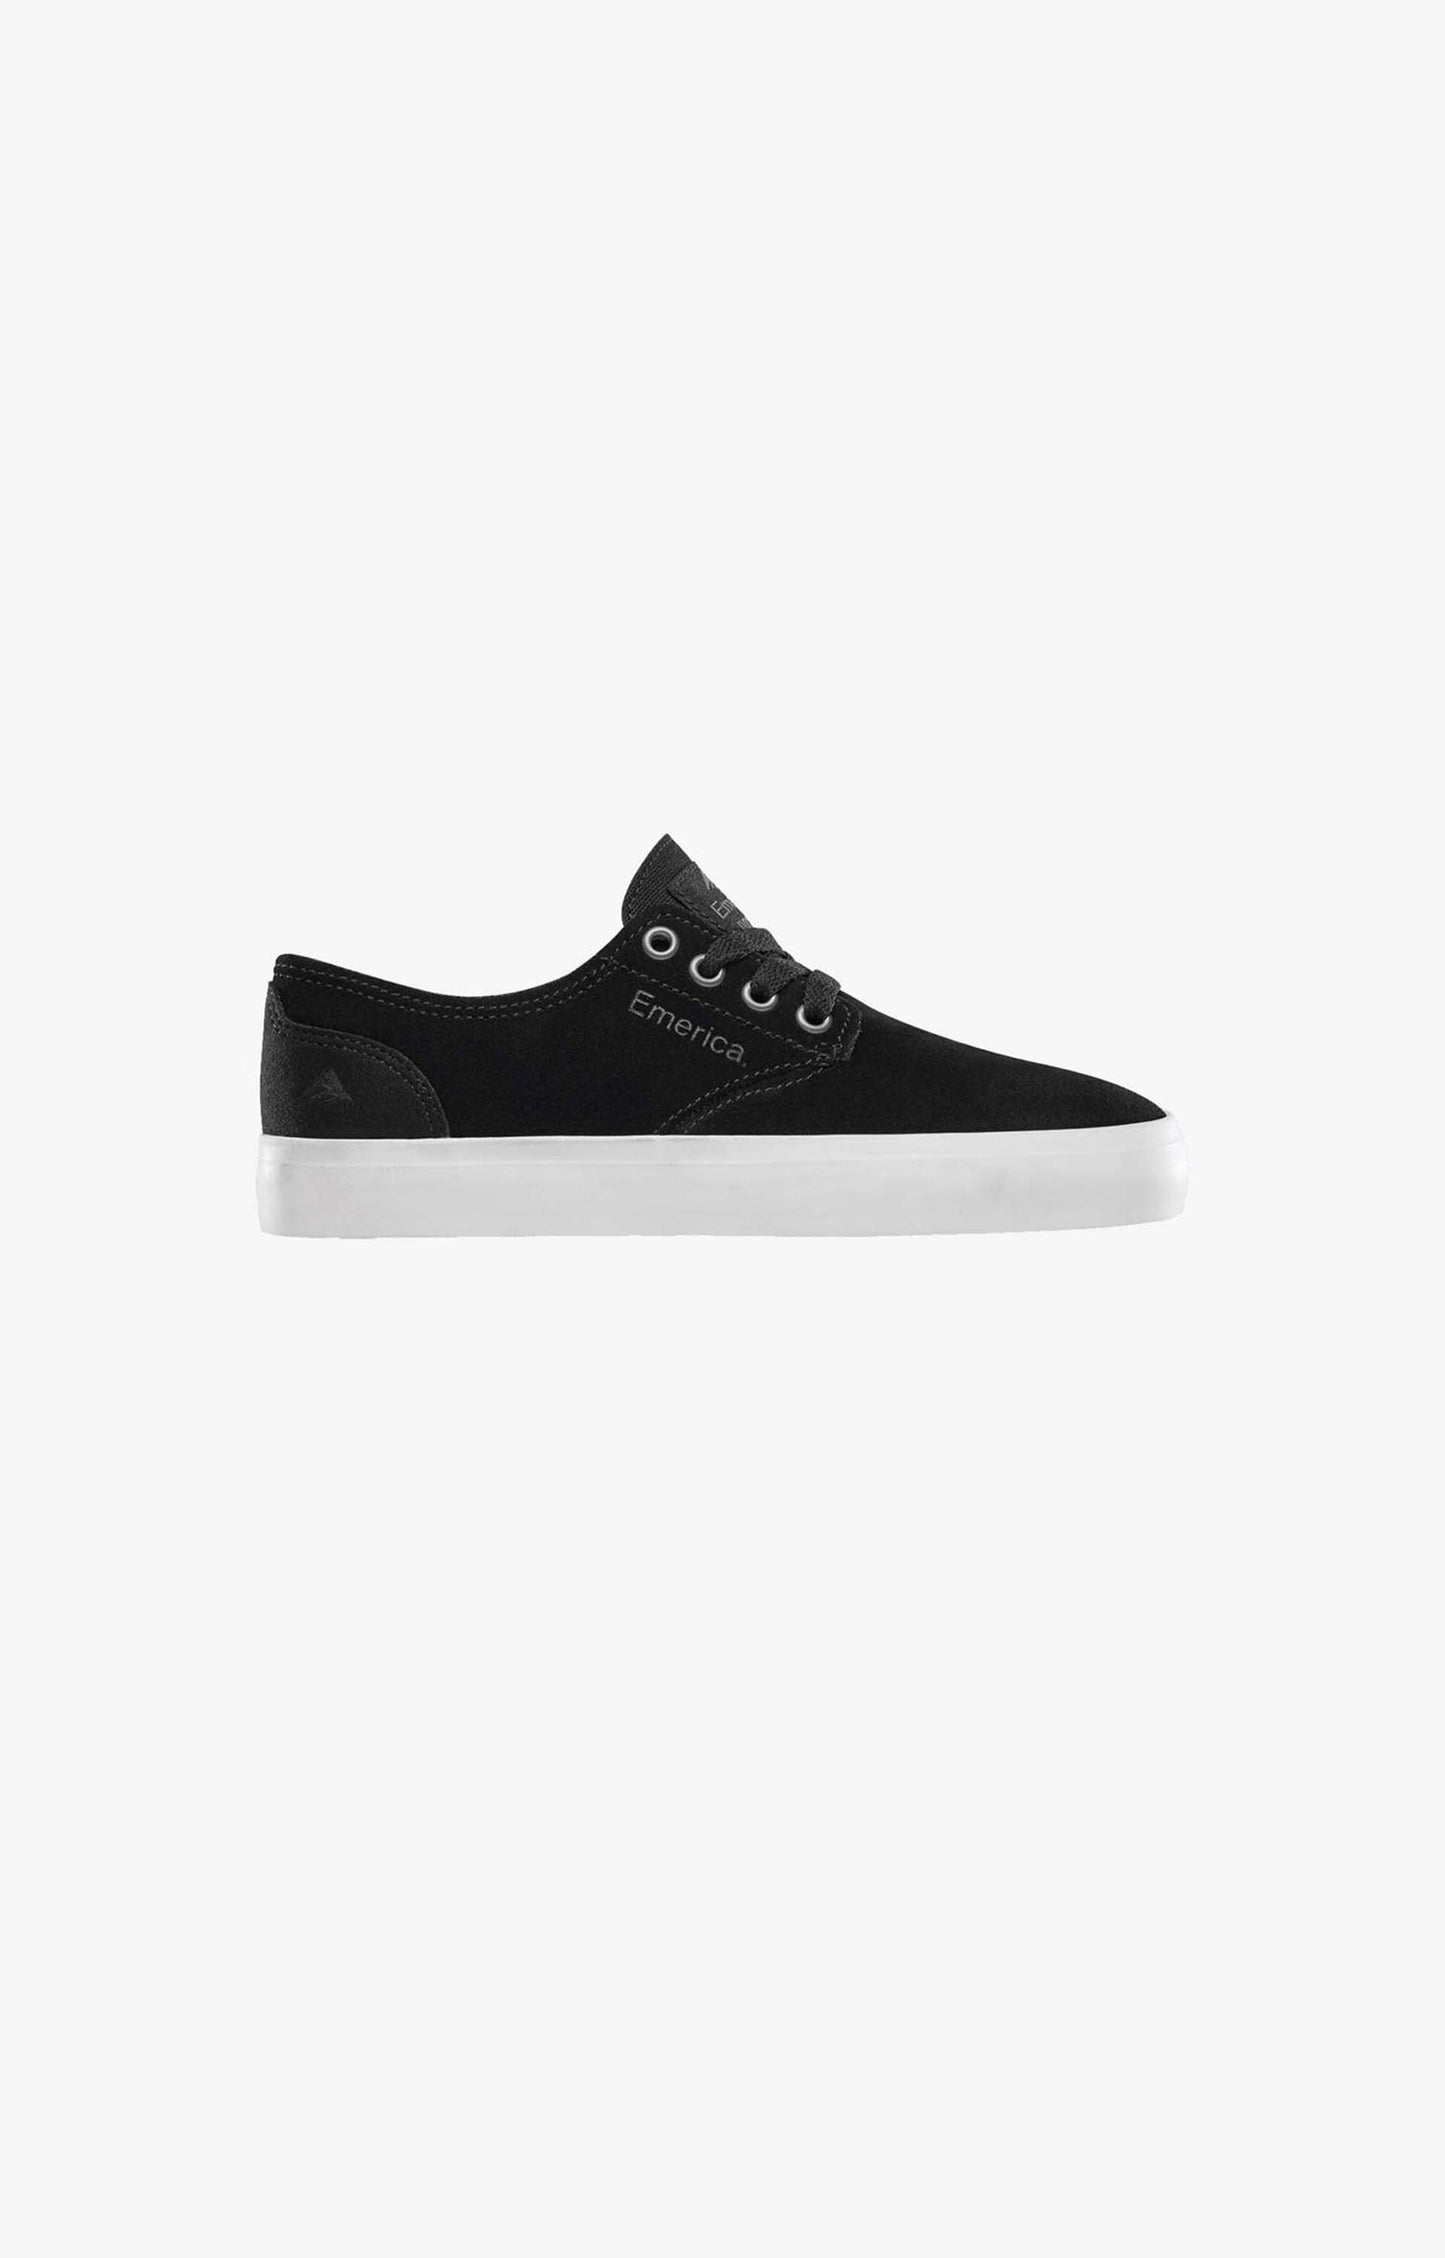 Emerica Romero Laced Youth Shoe, Black/Black/White